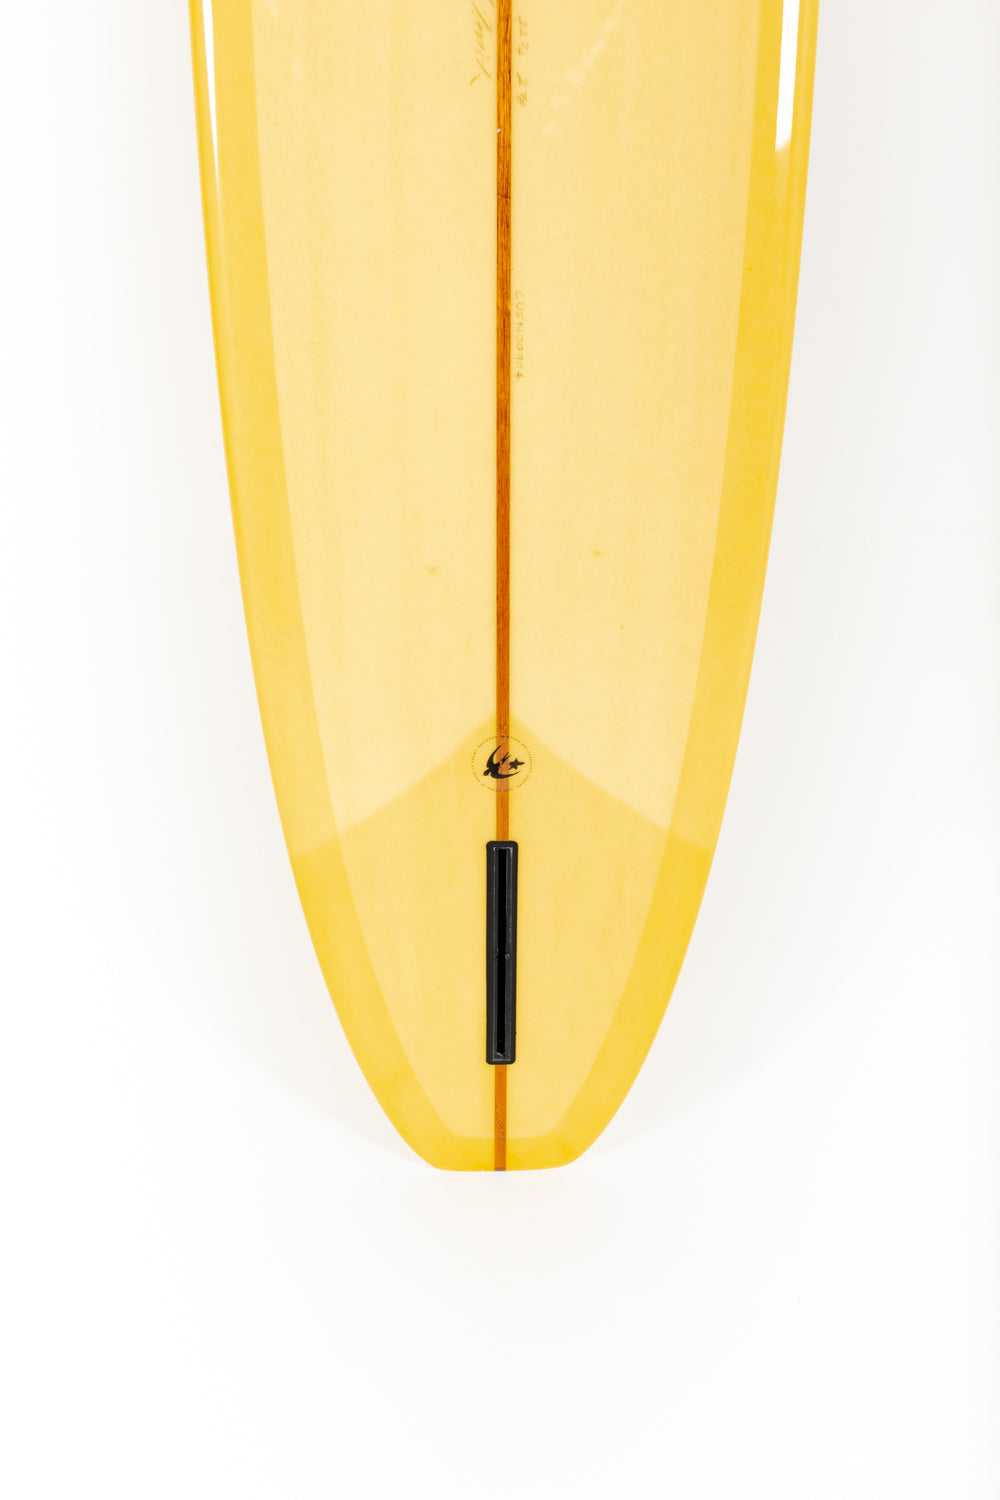 McTavish Surfboard - NOOSA 66 by Bob McTavish - 9'4” x 22 3/4 x 2 